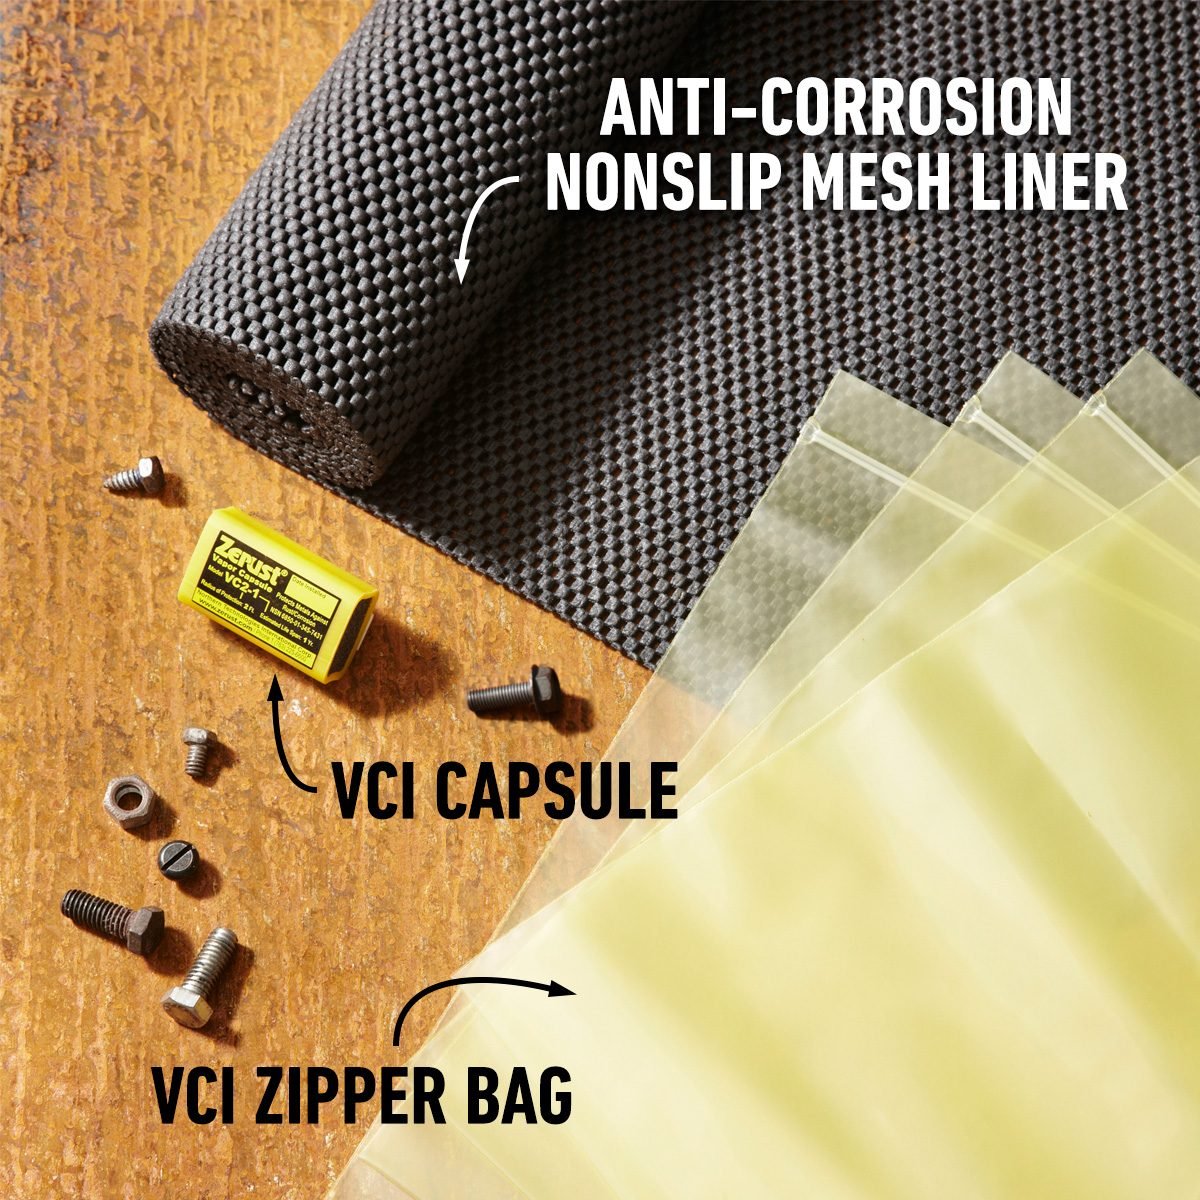 Anti-corrosion nonslip mesh liner, VCI capsule and VCI zipper bag